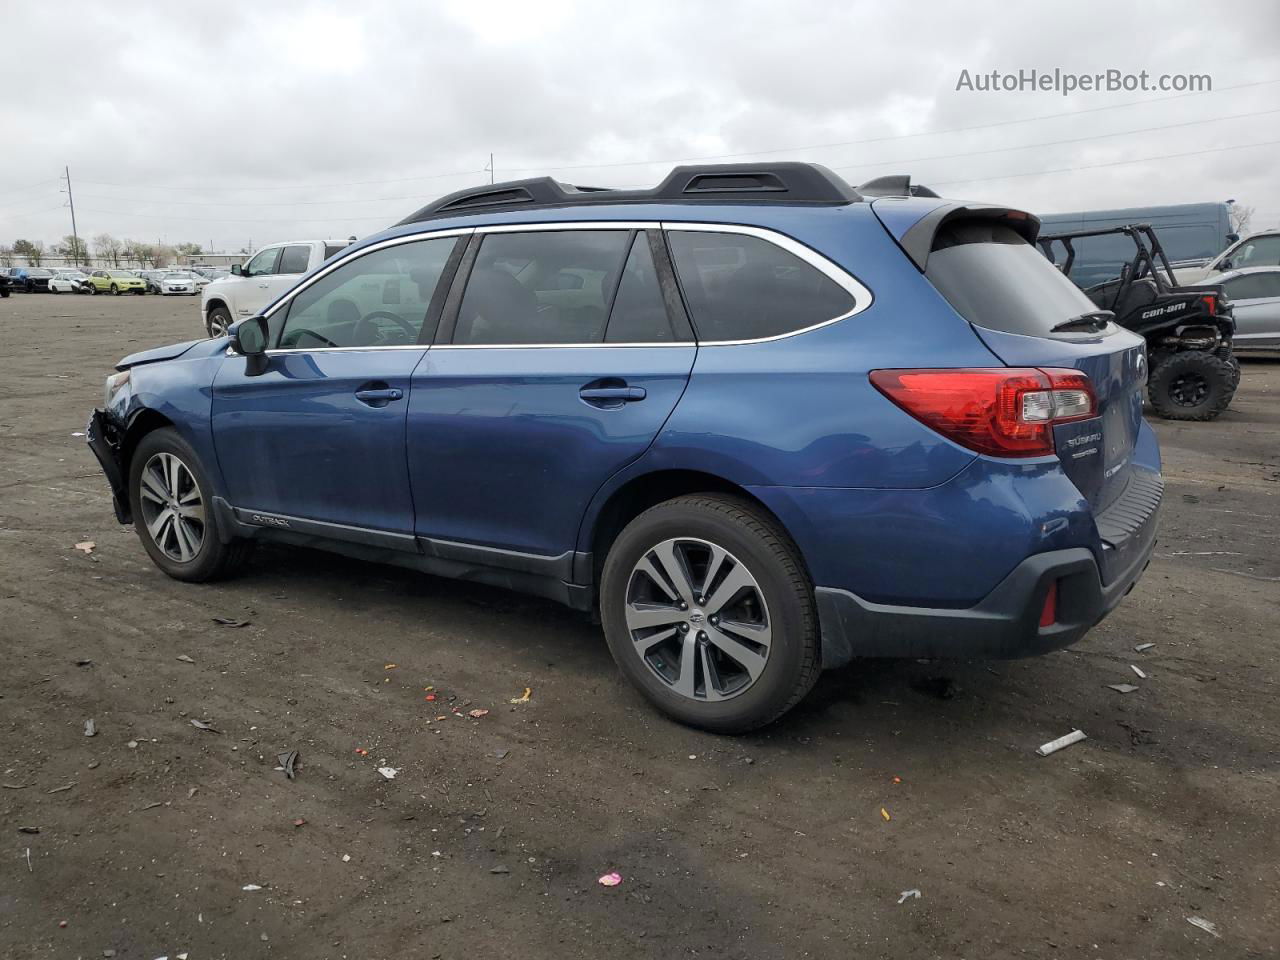 2019 Subaru Outback 2.5i Limited Gray vin: 4S4BSAJC8K3214037